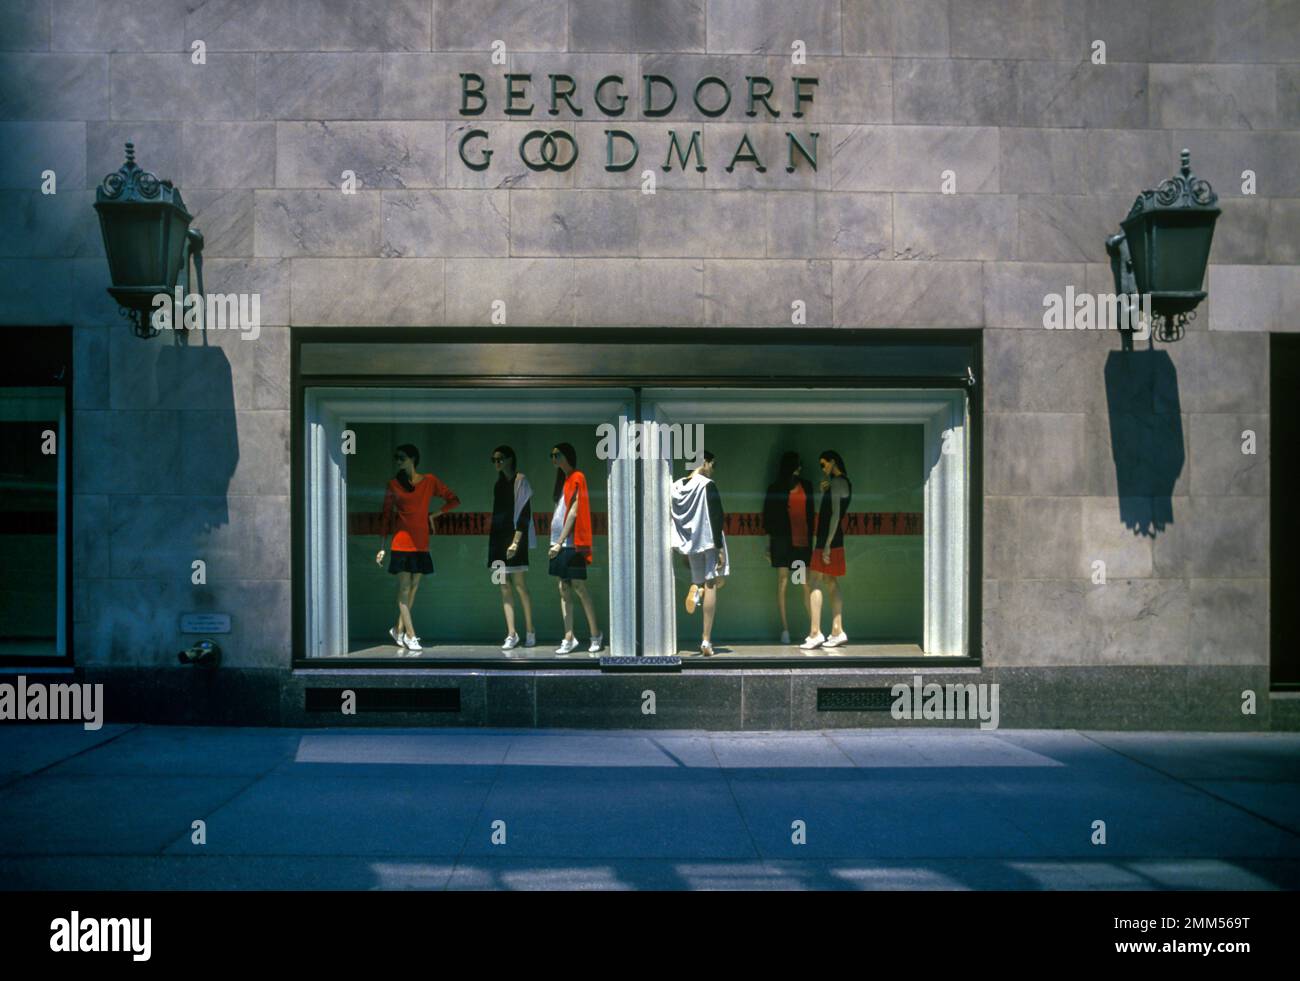 Bergdorf goodman hi-res stock photography and images - Alamy